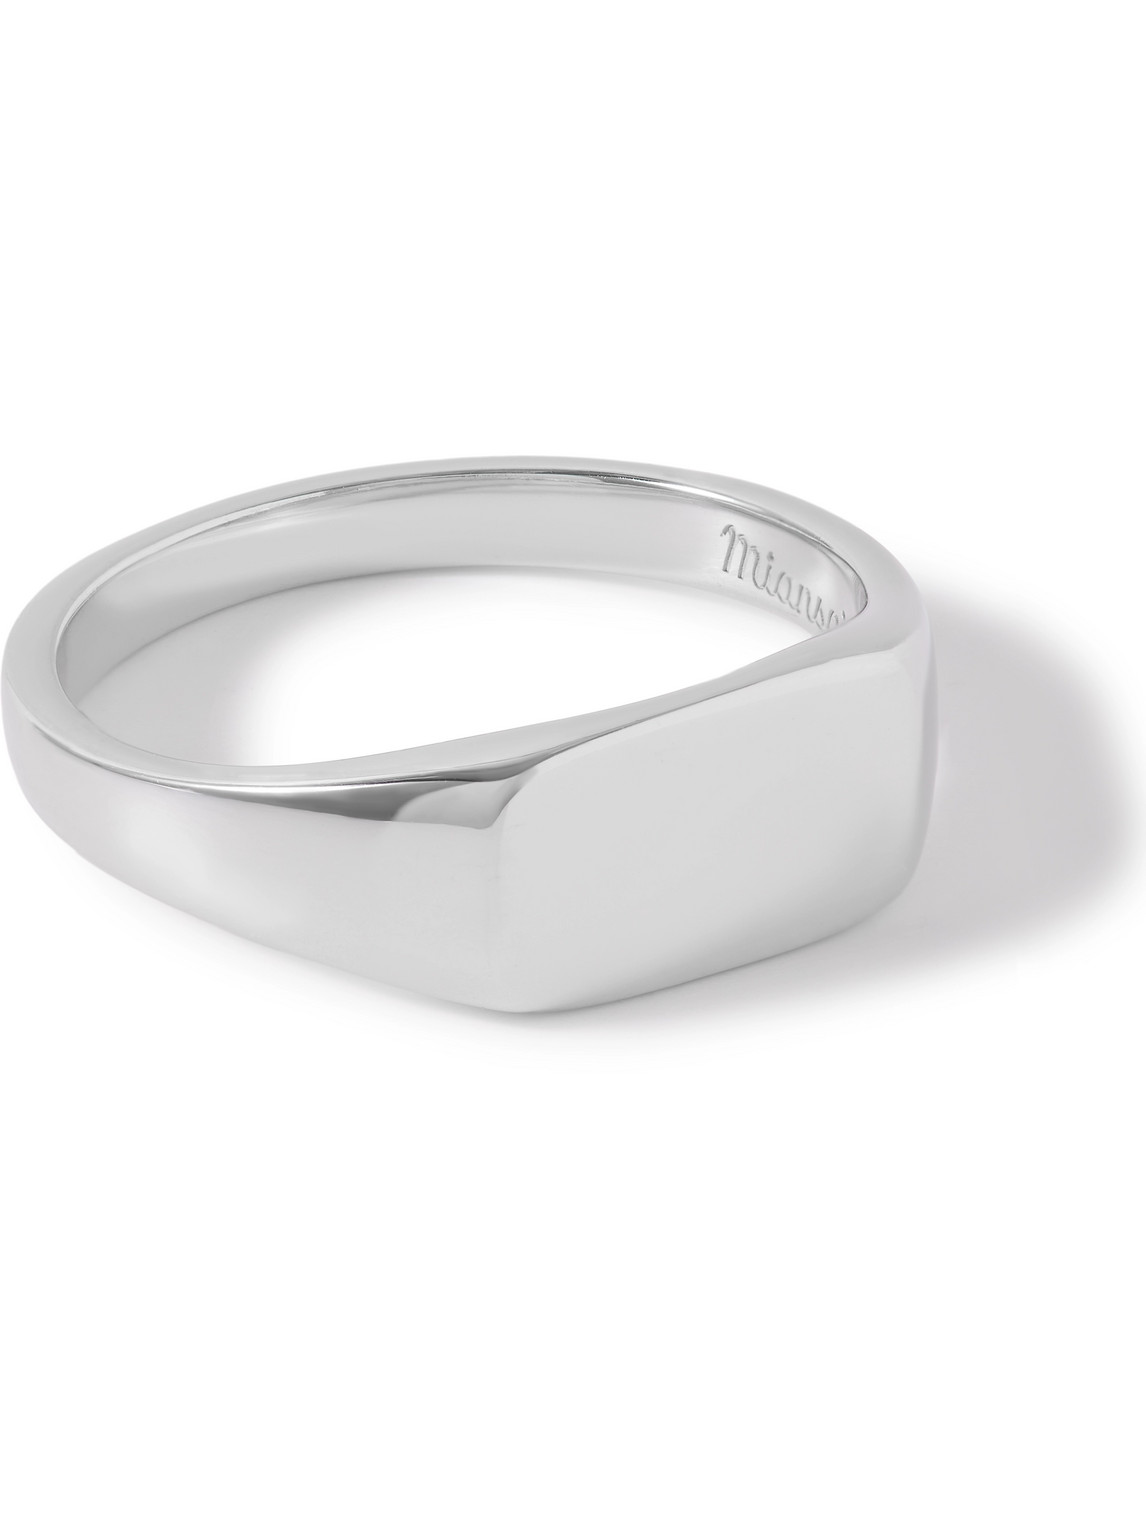 Arden Silver Ring